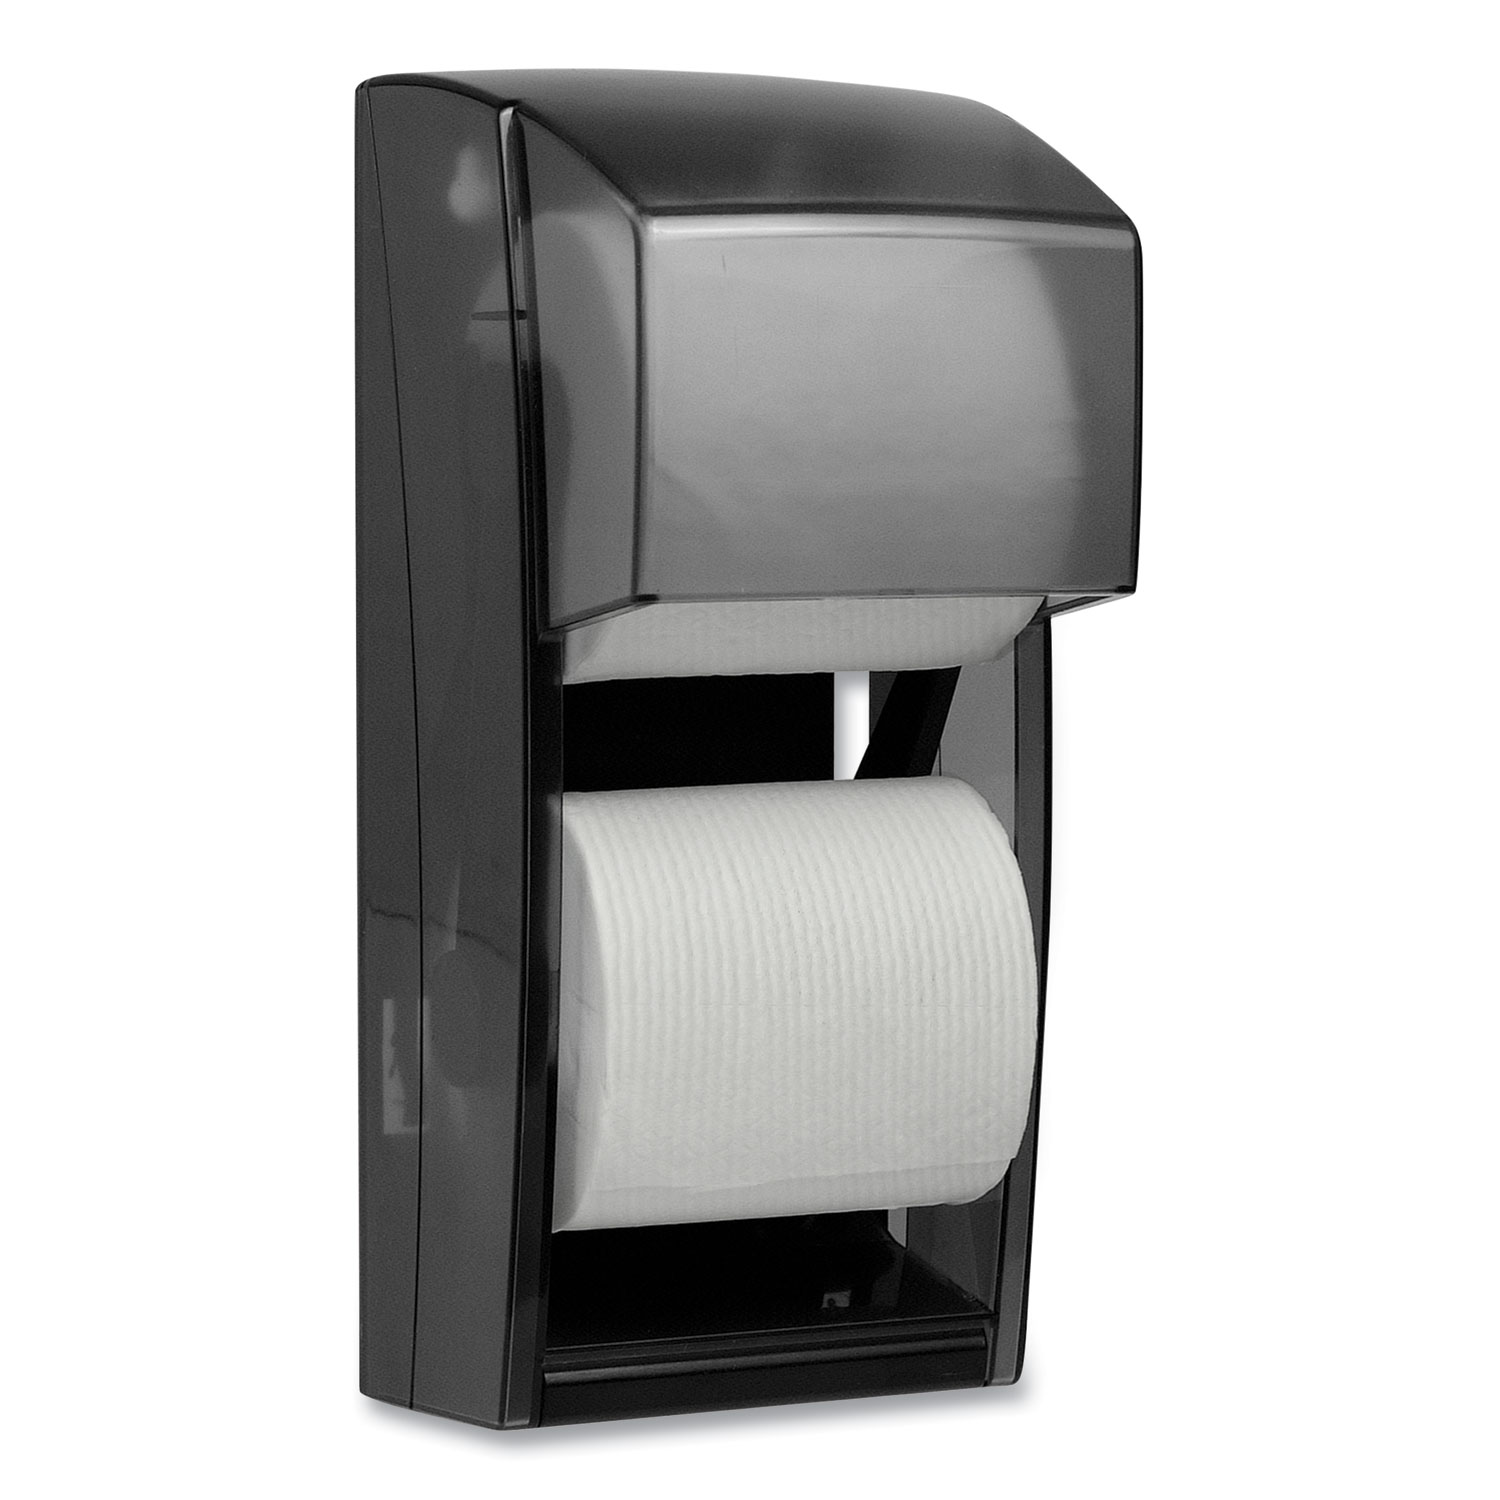 Cottonelle Professional Standard Roll Toilet Paper - Case/60